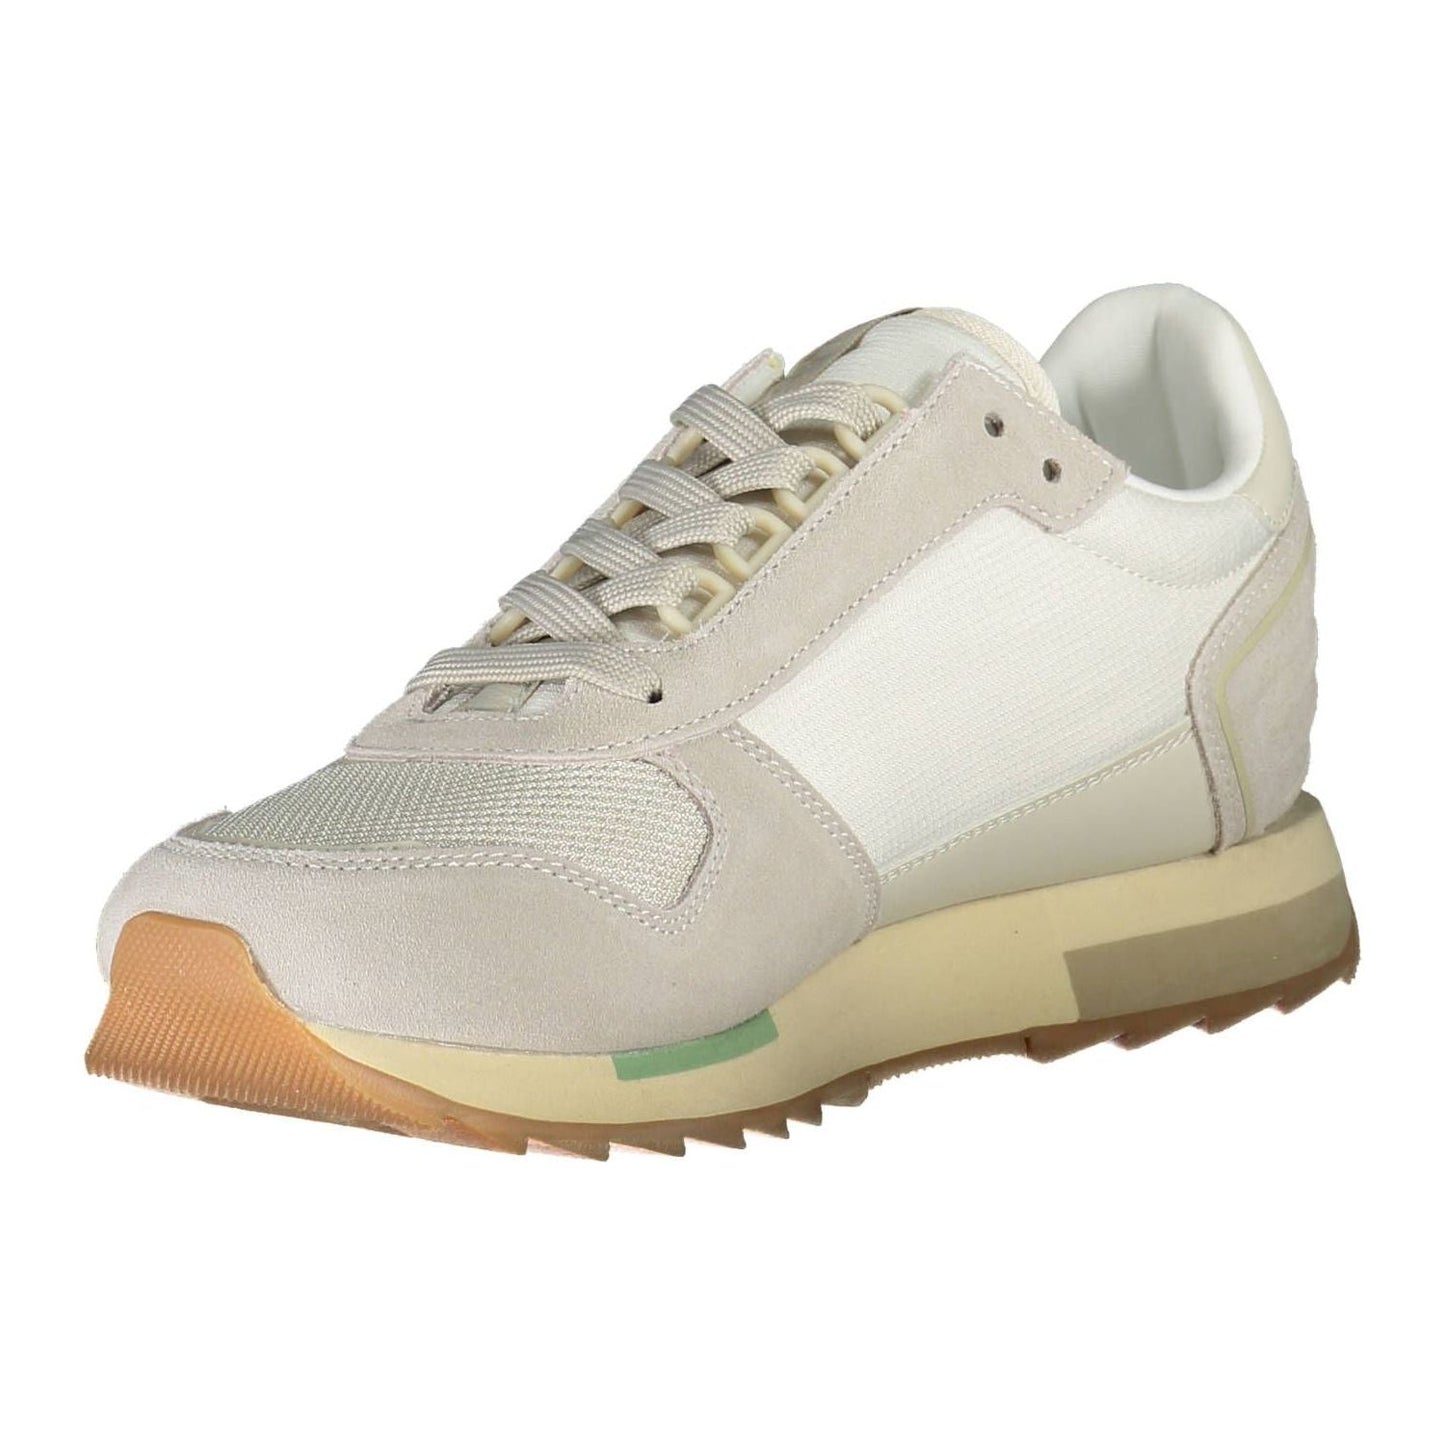 Napapijri Sleek White Sneakers with Contrasting Accents sleek-white-sneakers-with-contrasting-accents-1